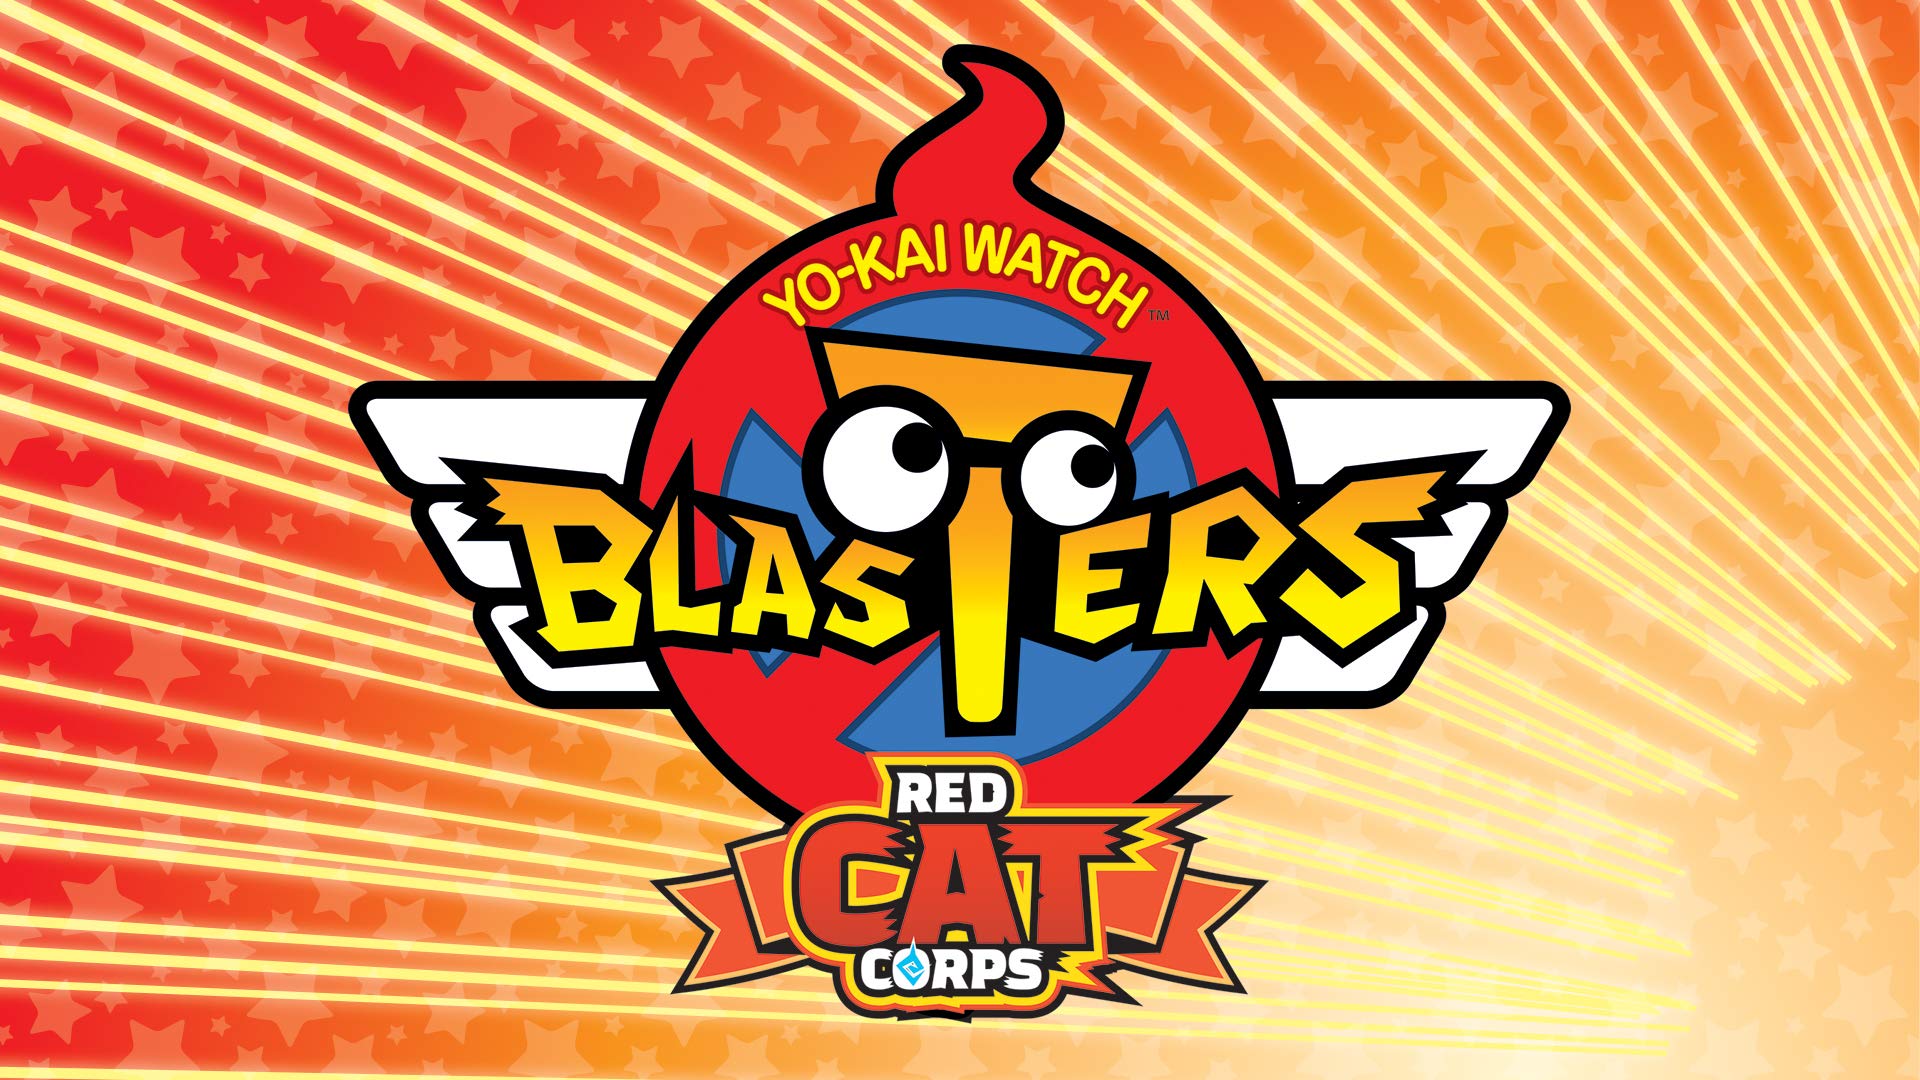 Yokai Watch Blasters Red Cat Corps - HD Wallpaper 